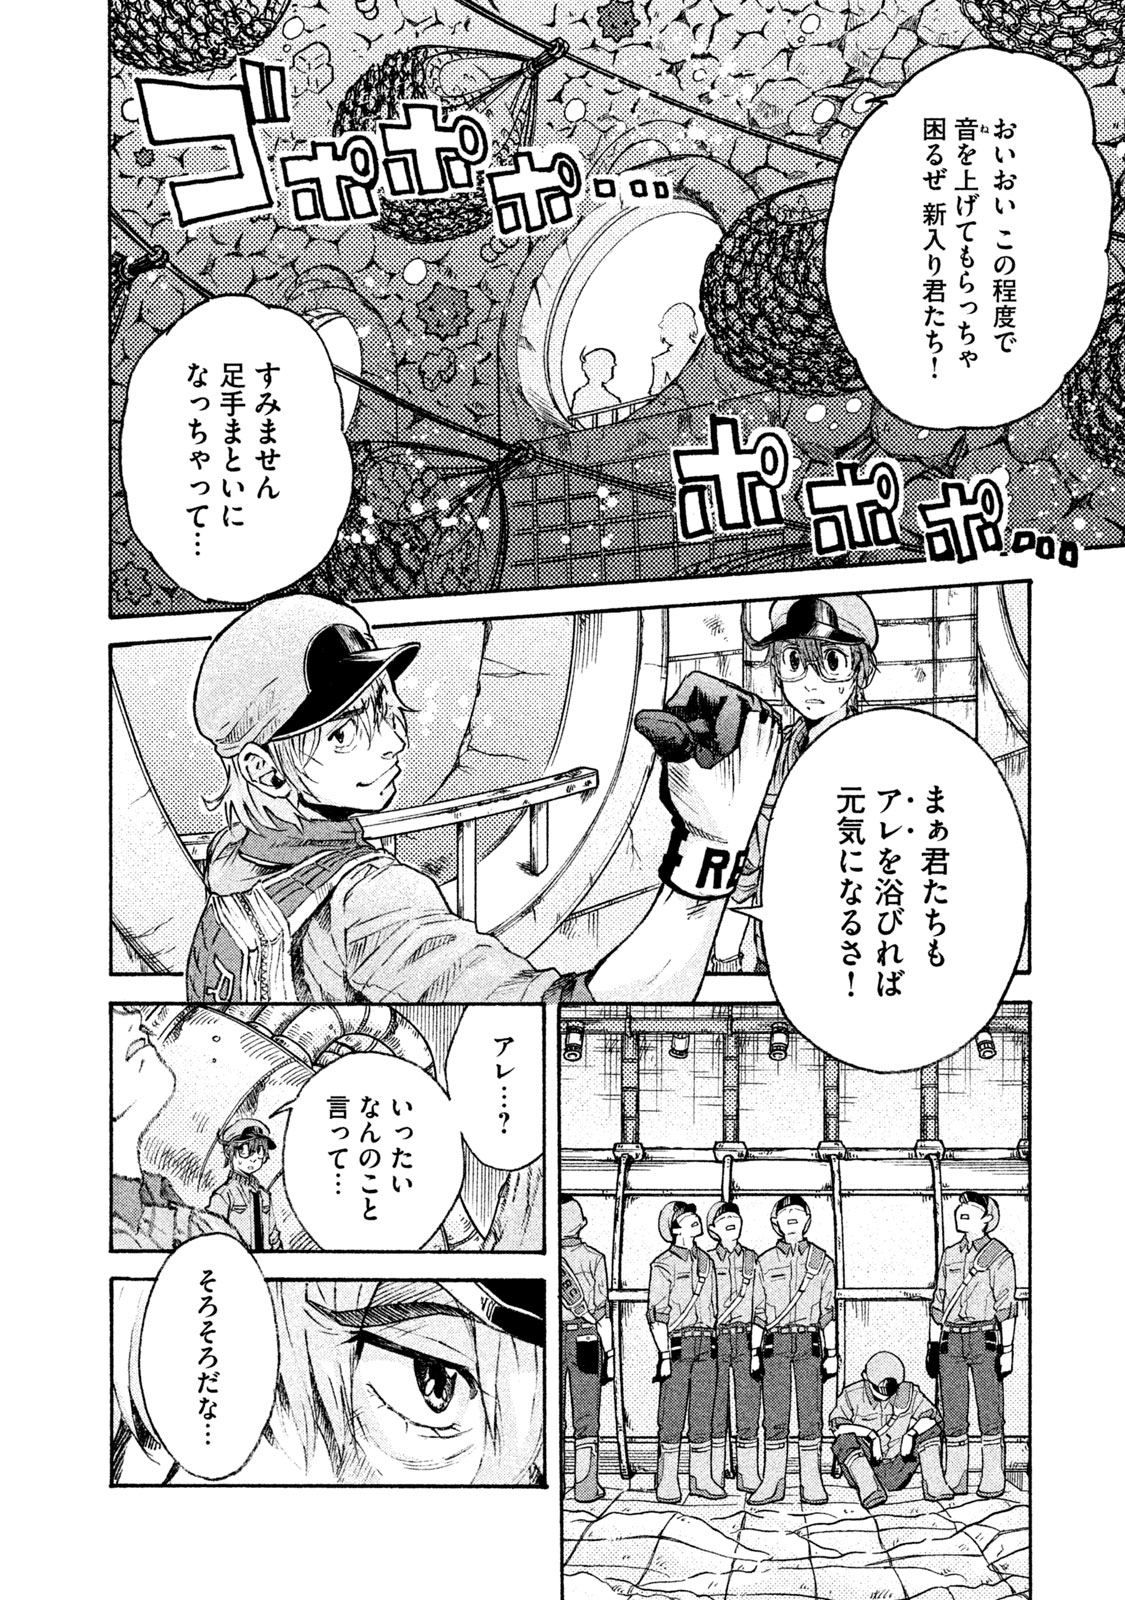 Hataraku Saibou BLACK - Chapter 12 - Page 6